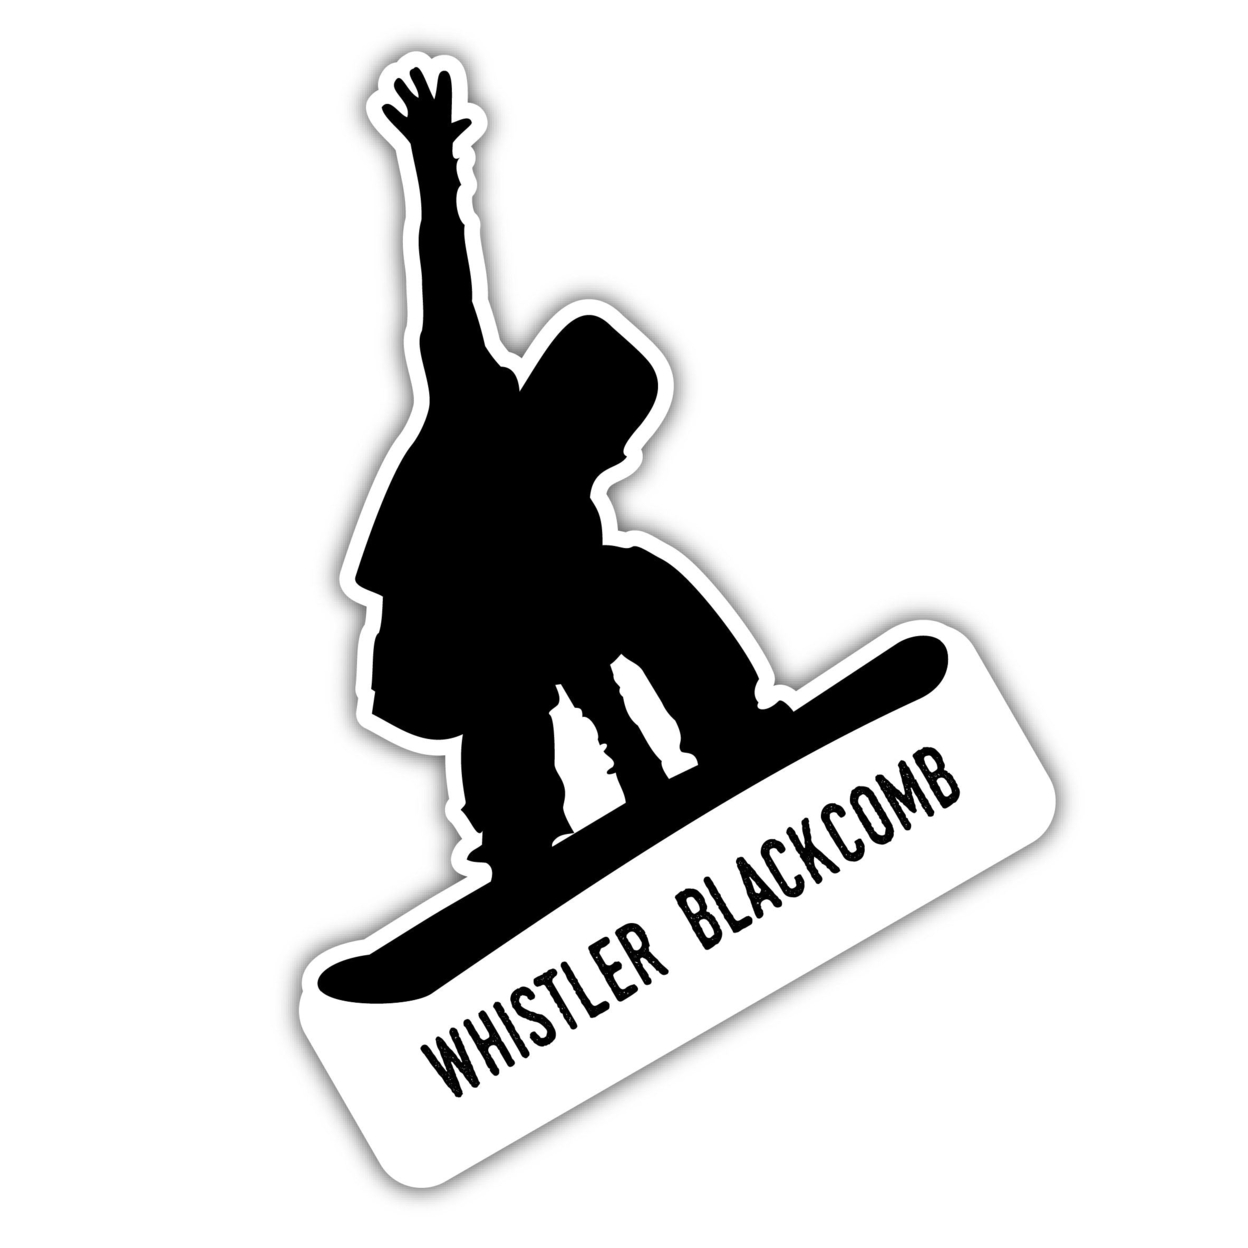 Whistler Blackcomb British Columbia Ski Adventures Souvenir 4 Inch Vinyl Decal Sticker Mountain Design